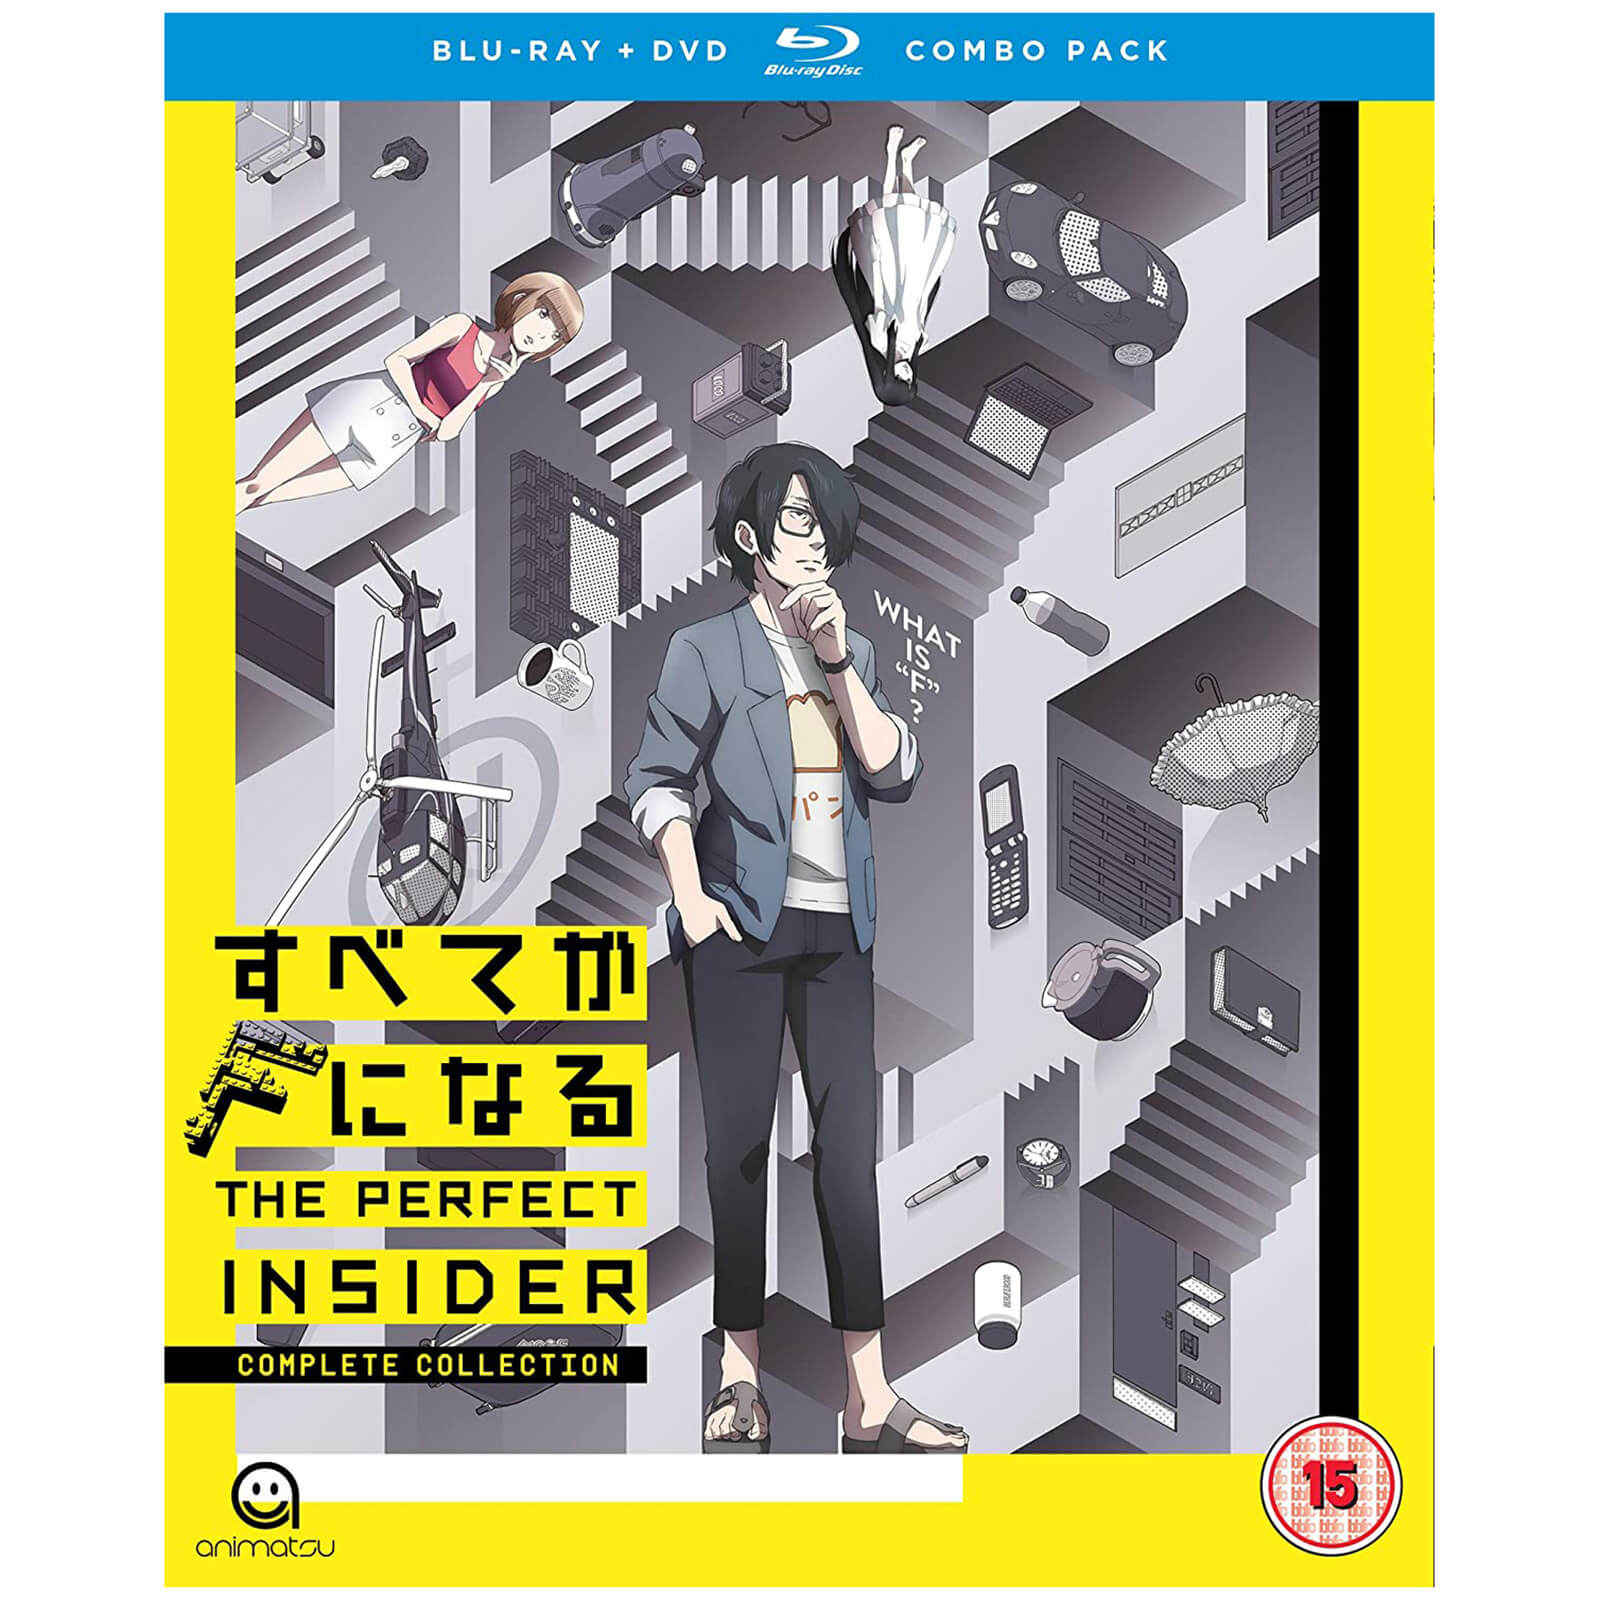 Der perfekte Insider - Komplette Saison Sammlung Blu-ray/DVD Combo Pack von Crunchyroll